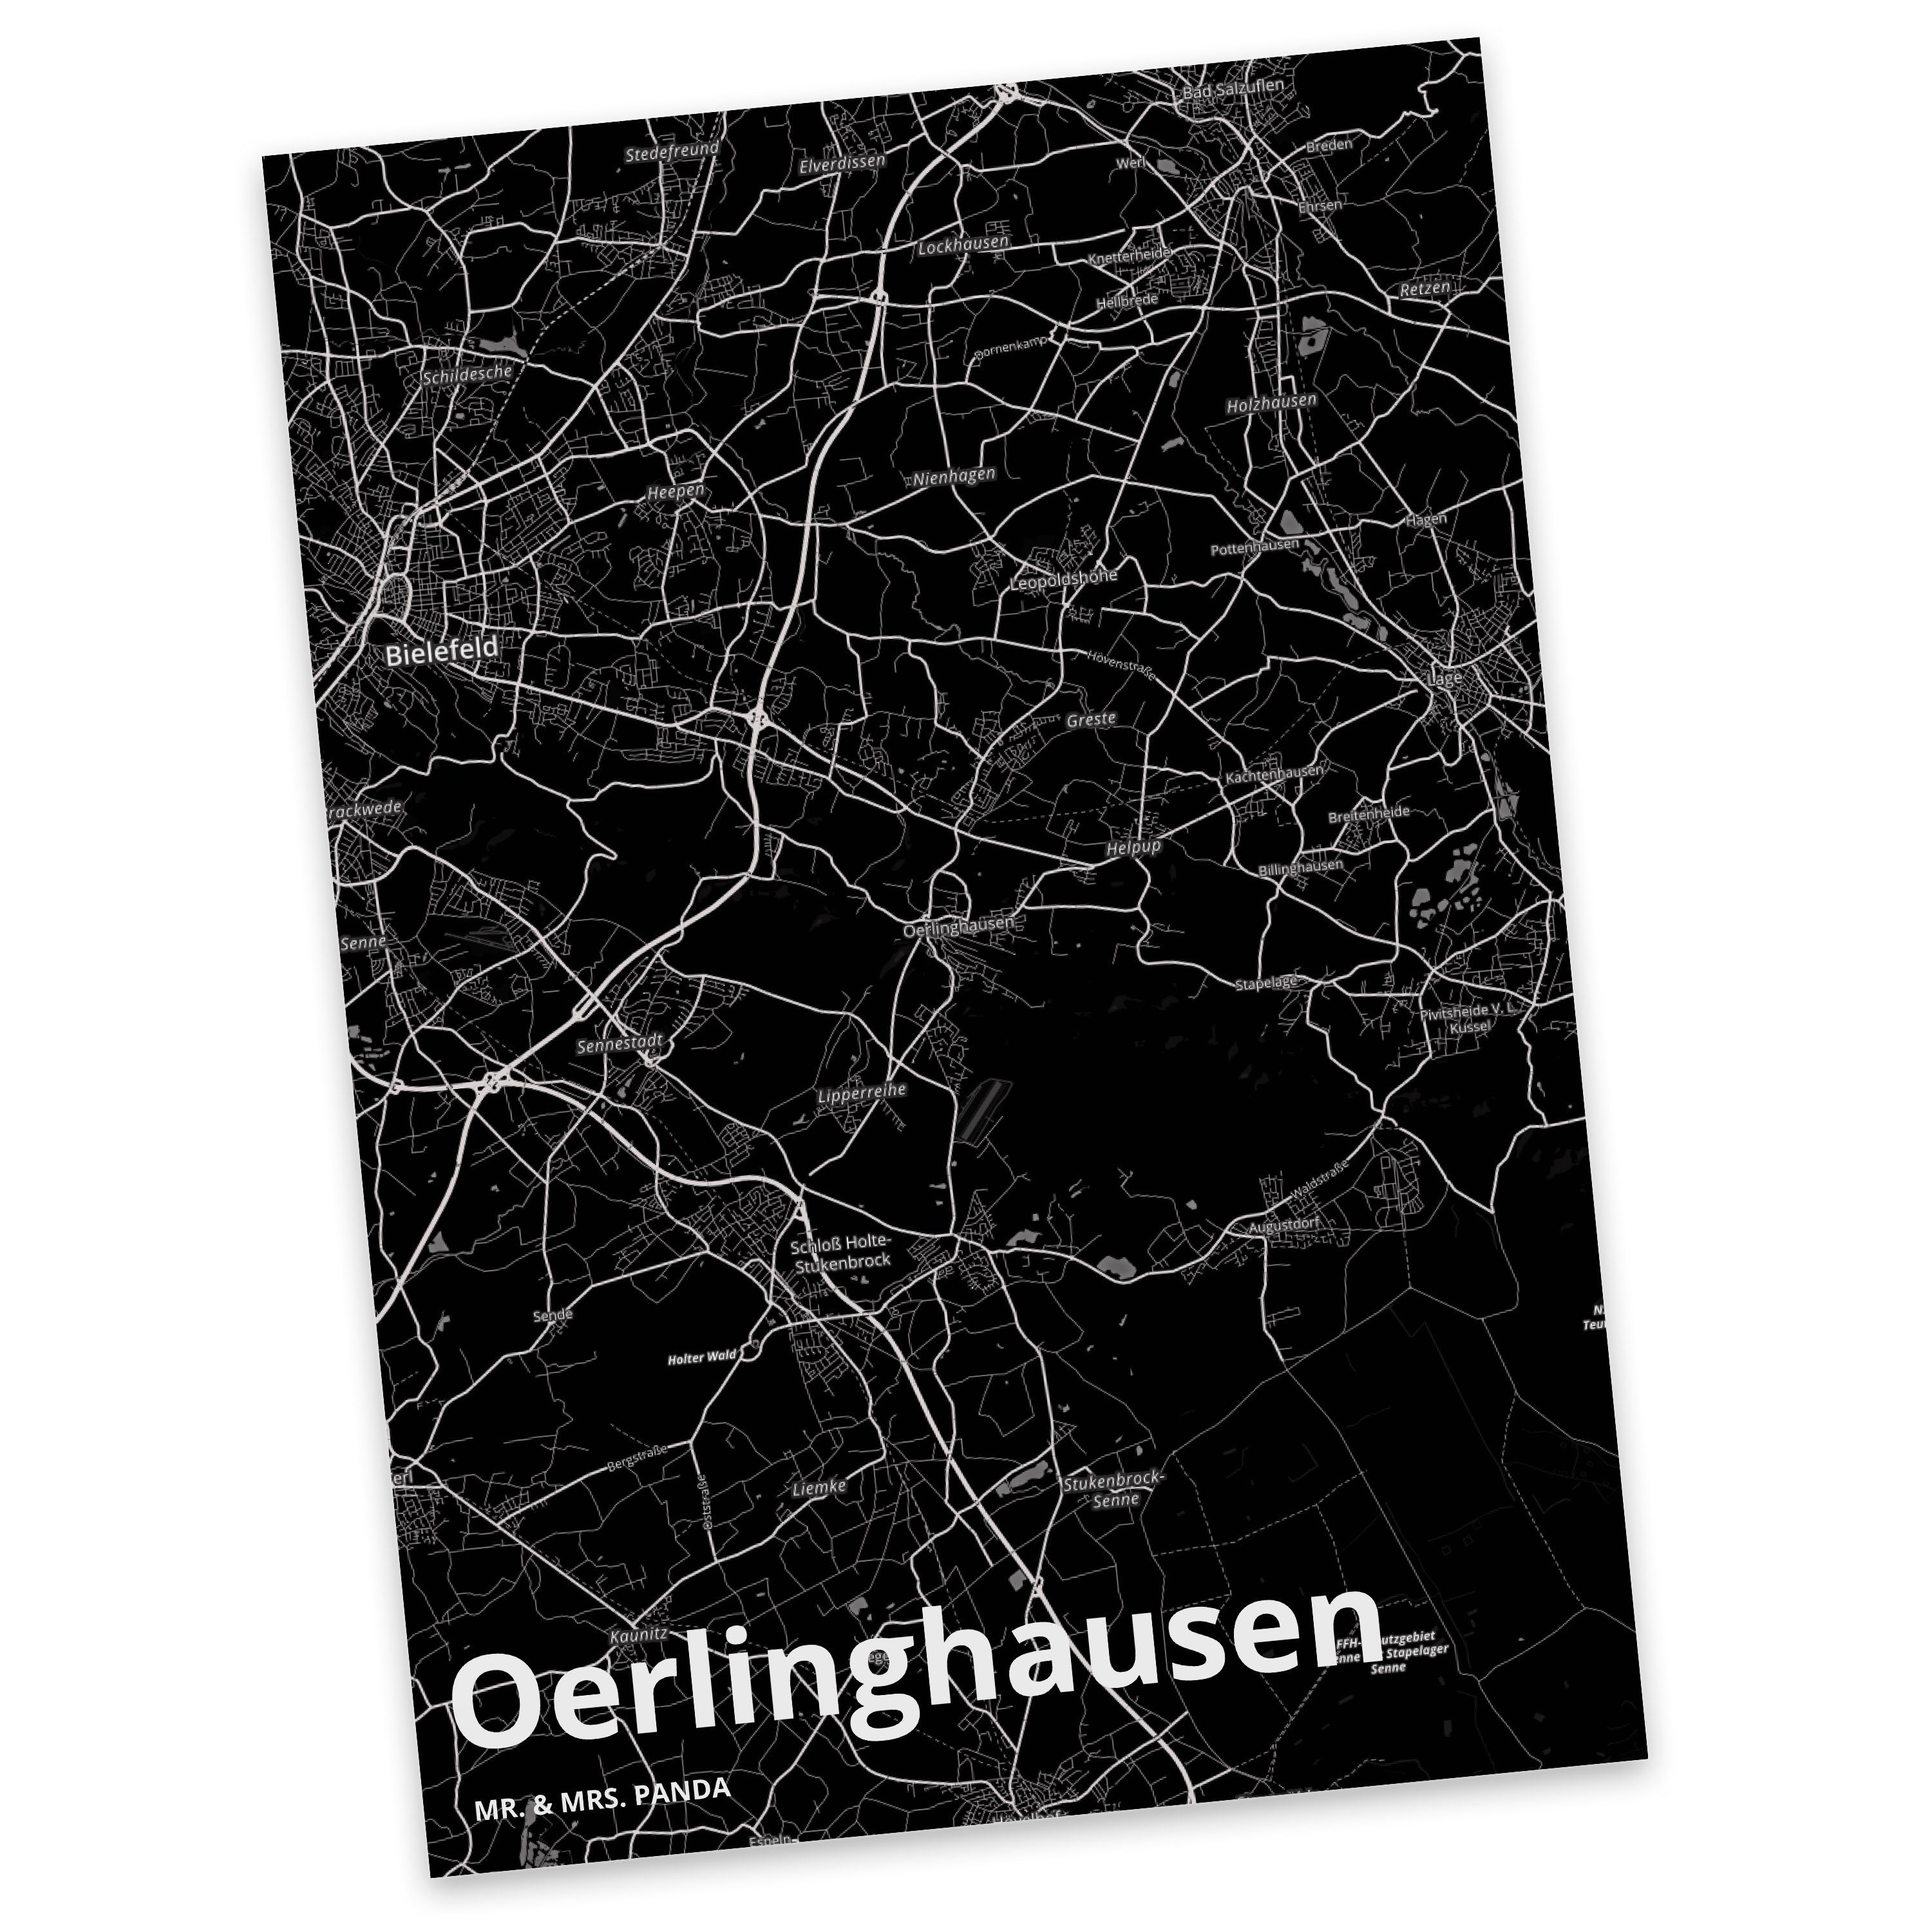 Mr. & Mrs. Panda Postkarte Oerlinghausen - Geschenk, Ort, Dankeskarte, Stadt Dorf Karte Landkart